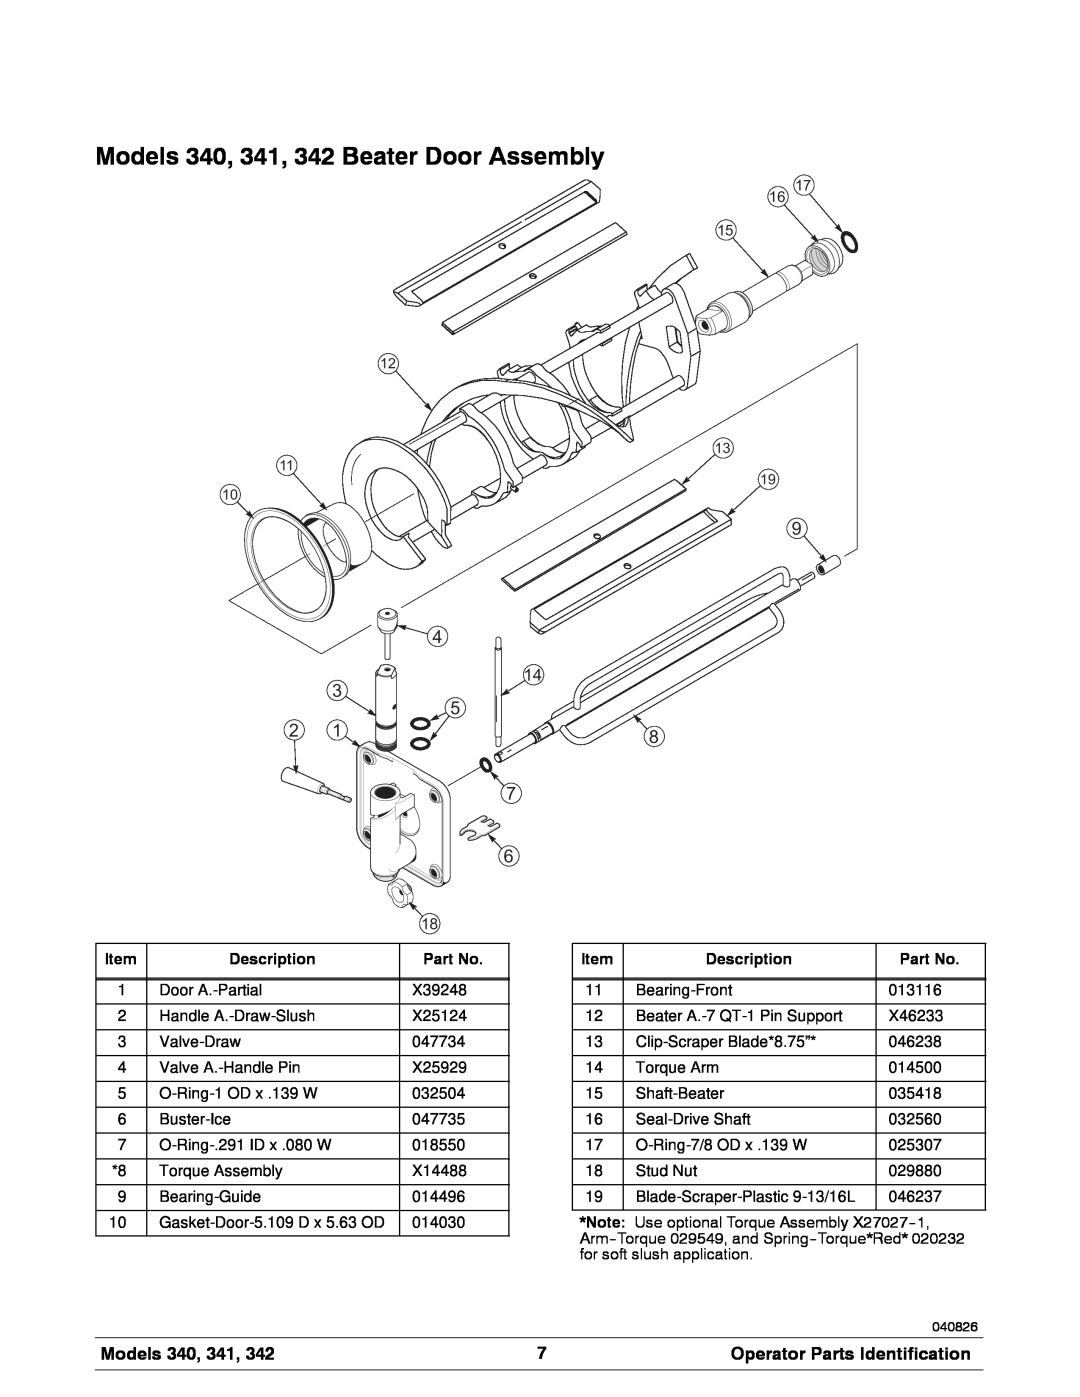 Taylor manual Models 340, 341, 342 Beater Door Assembly, Operator Parts Identification, Description 